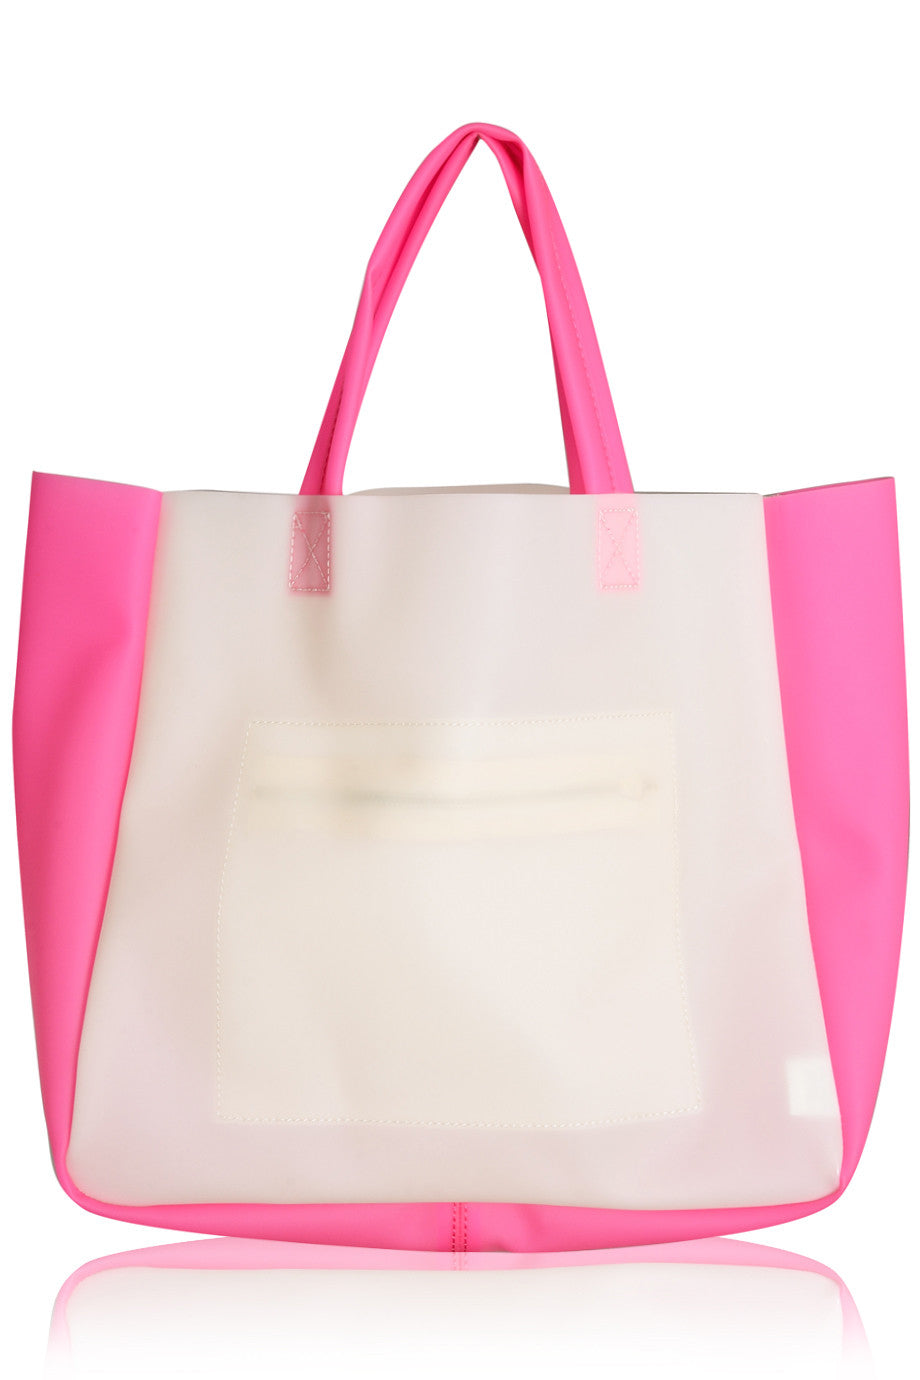 RIKKI Neon Pink Phosphorescent Bag